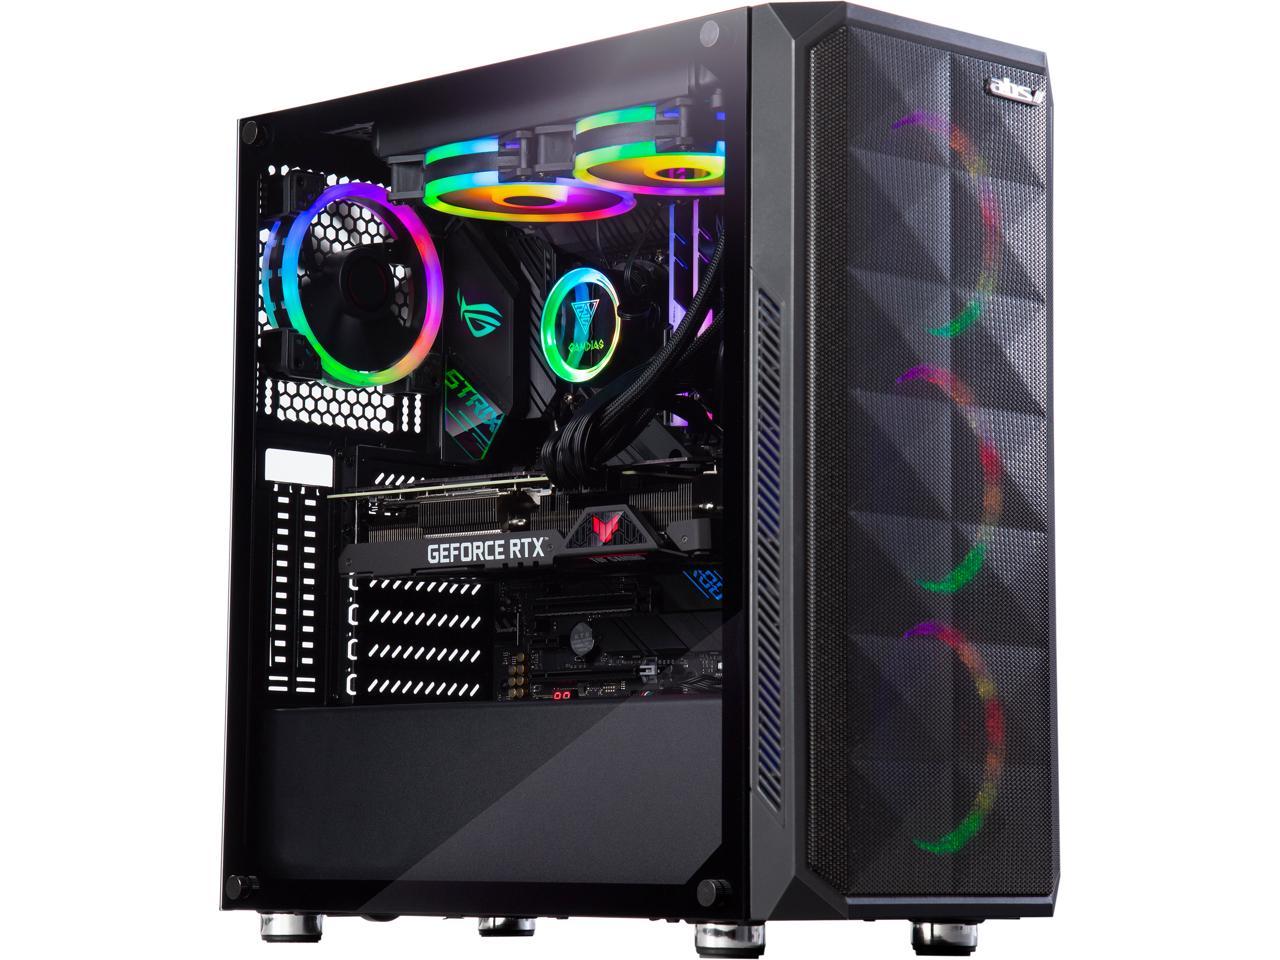 ABS Gladiator Gaming PC - Intel i9 10850K - GeForce RTX 3080 - G.Skill  TridentZ RGB 32GB DDR4 3200MHz - 1TB Intel M.2 NVMe SSD - RGB AIO 240MM